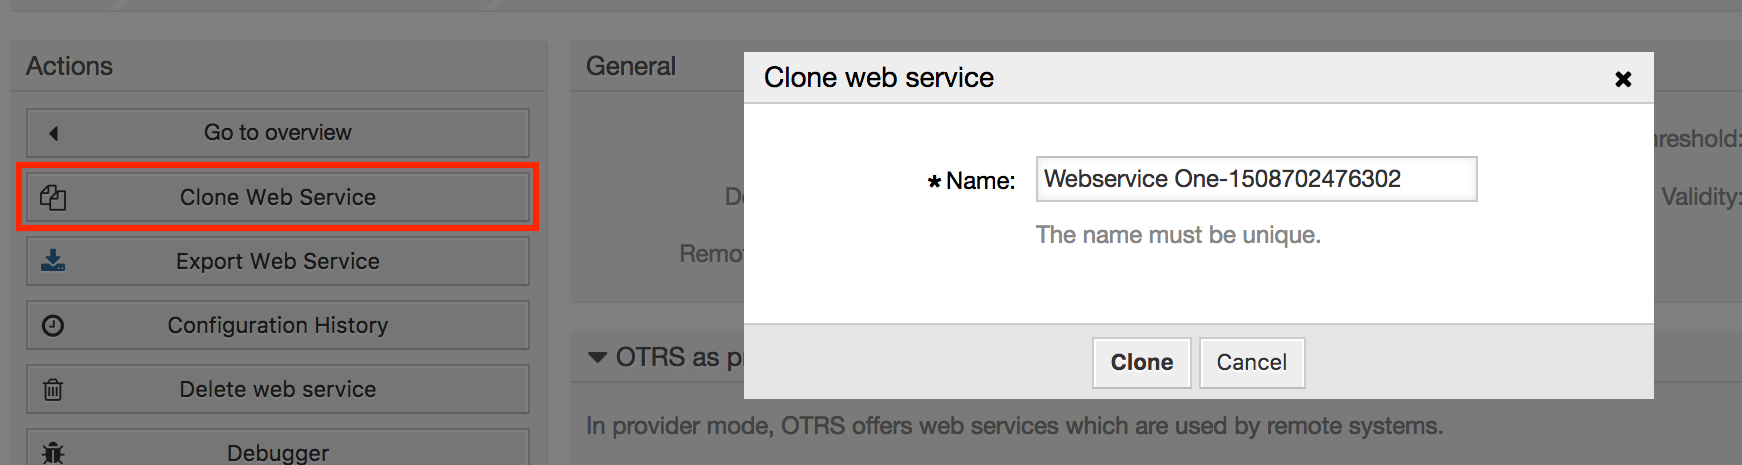 Web service clone